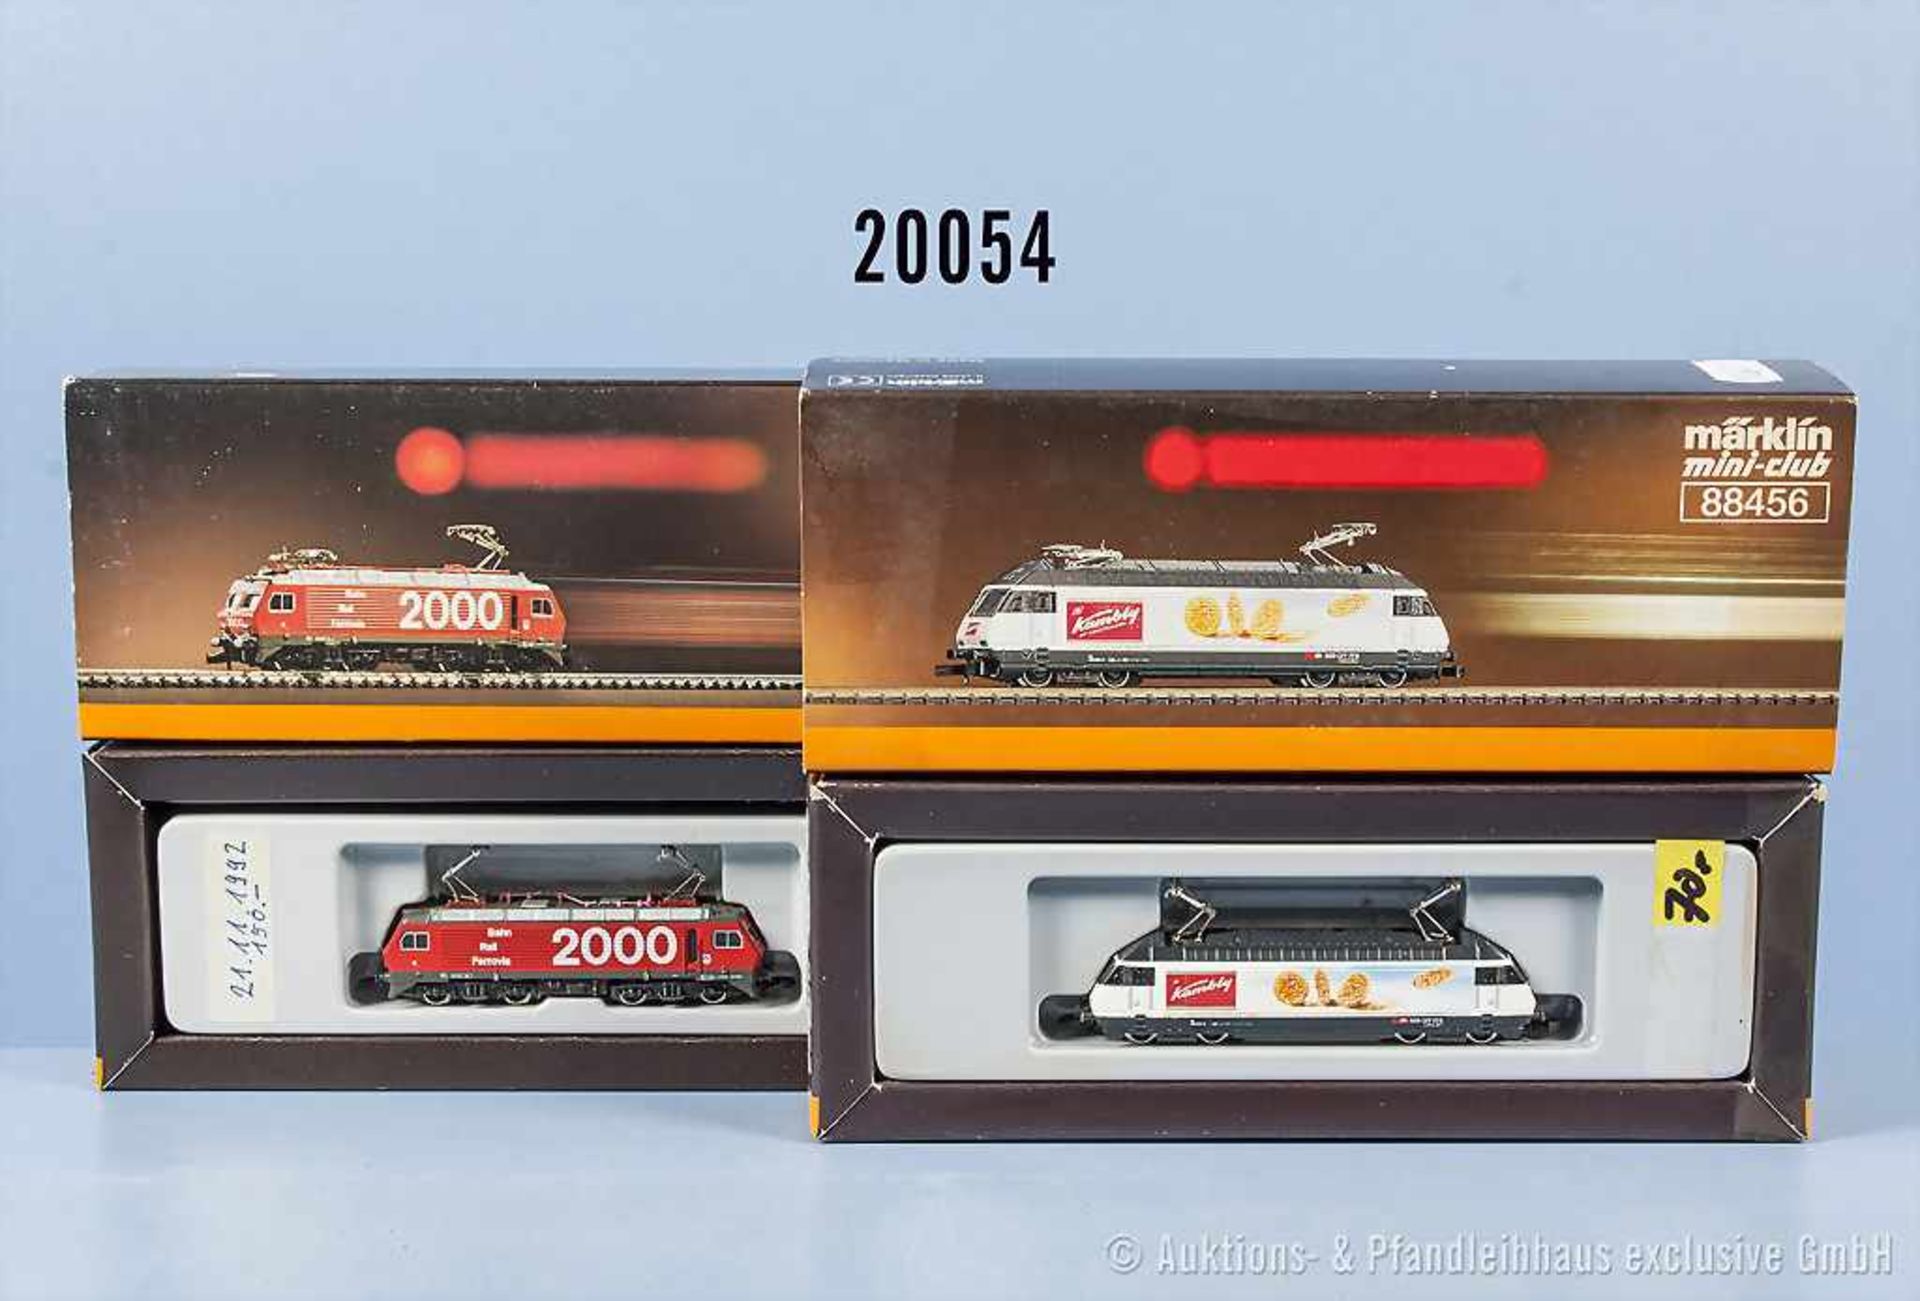 Konv. 2 Märklin mini-club Spur Z Lokomotiven, dabei 8847 E-Lok der SBB, Dekor "Bahn 2000" (